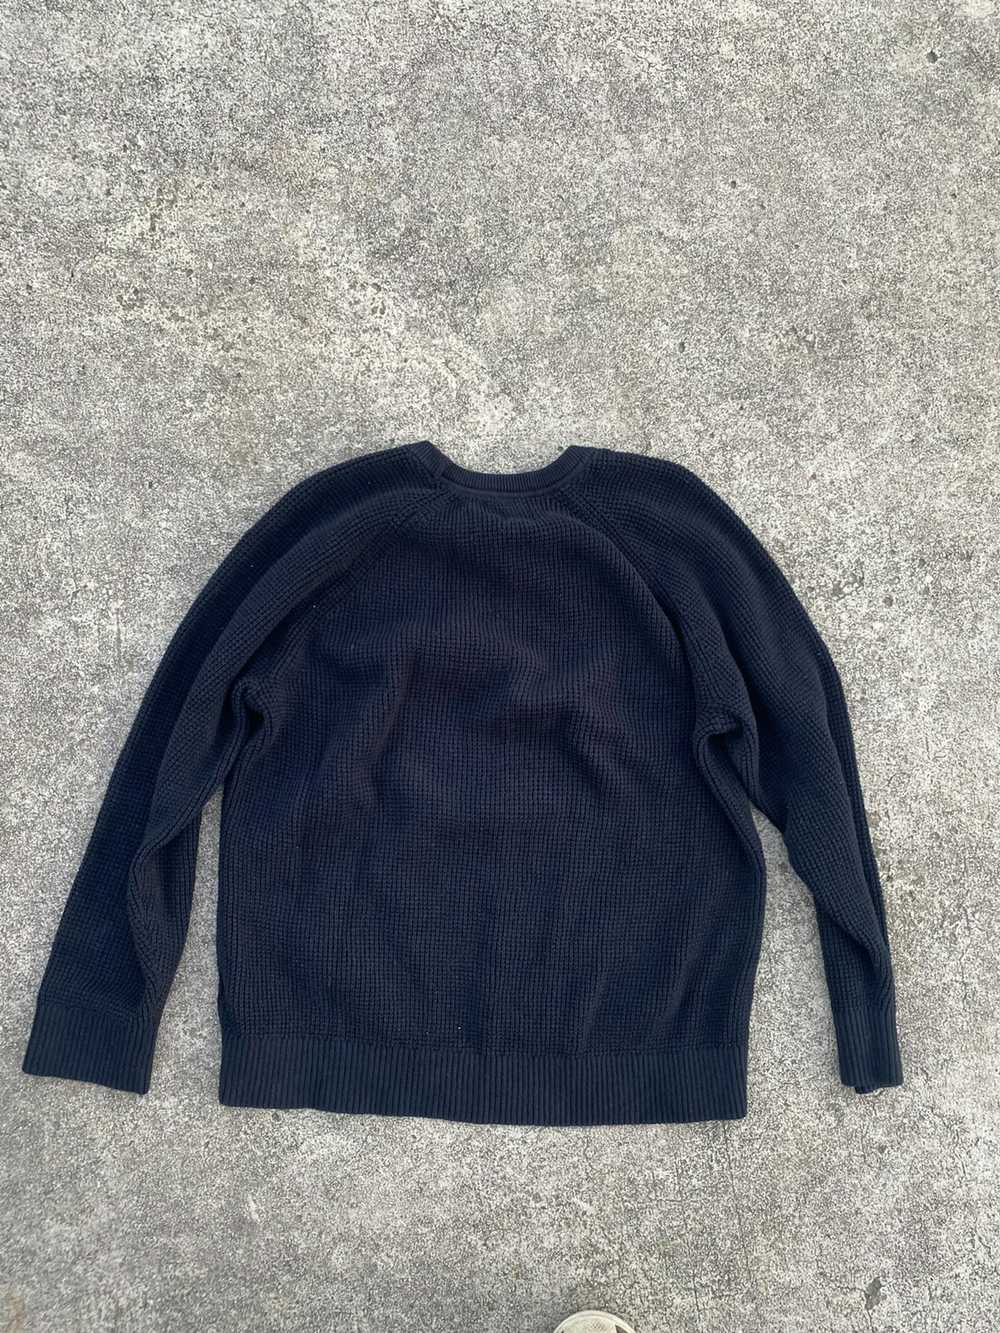 Gap Black Knit Sweater - image 2